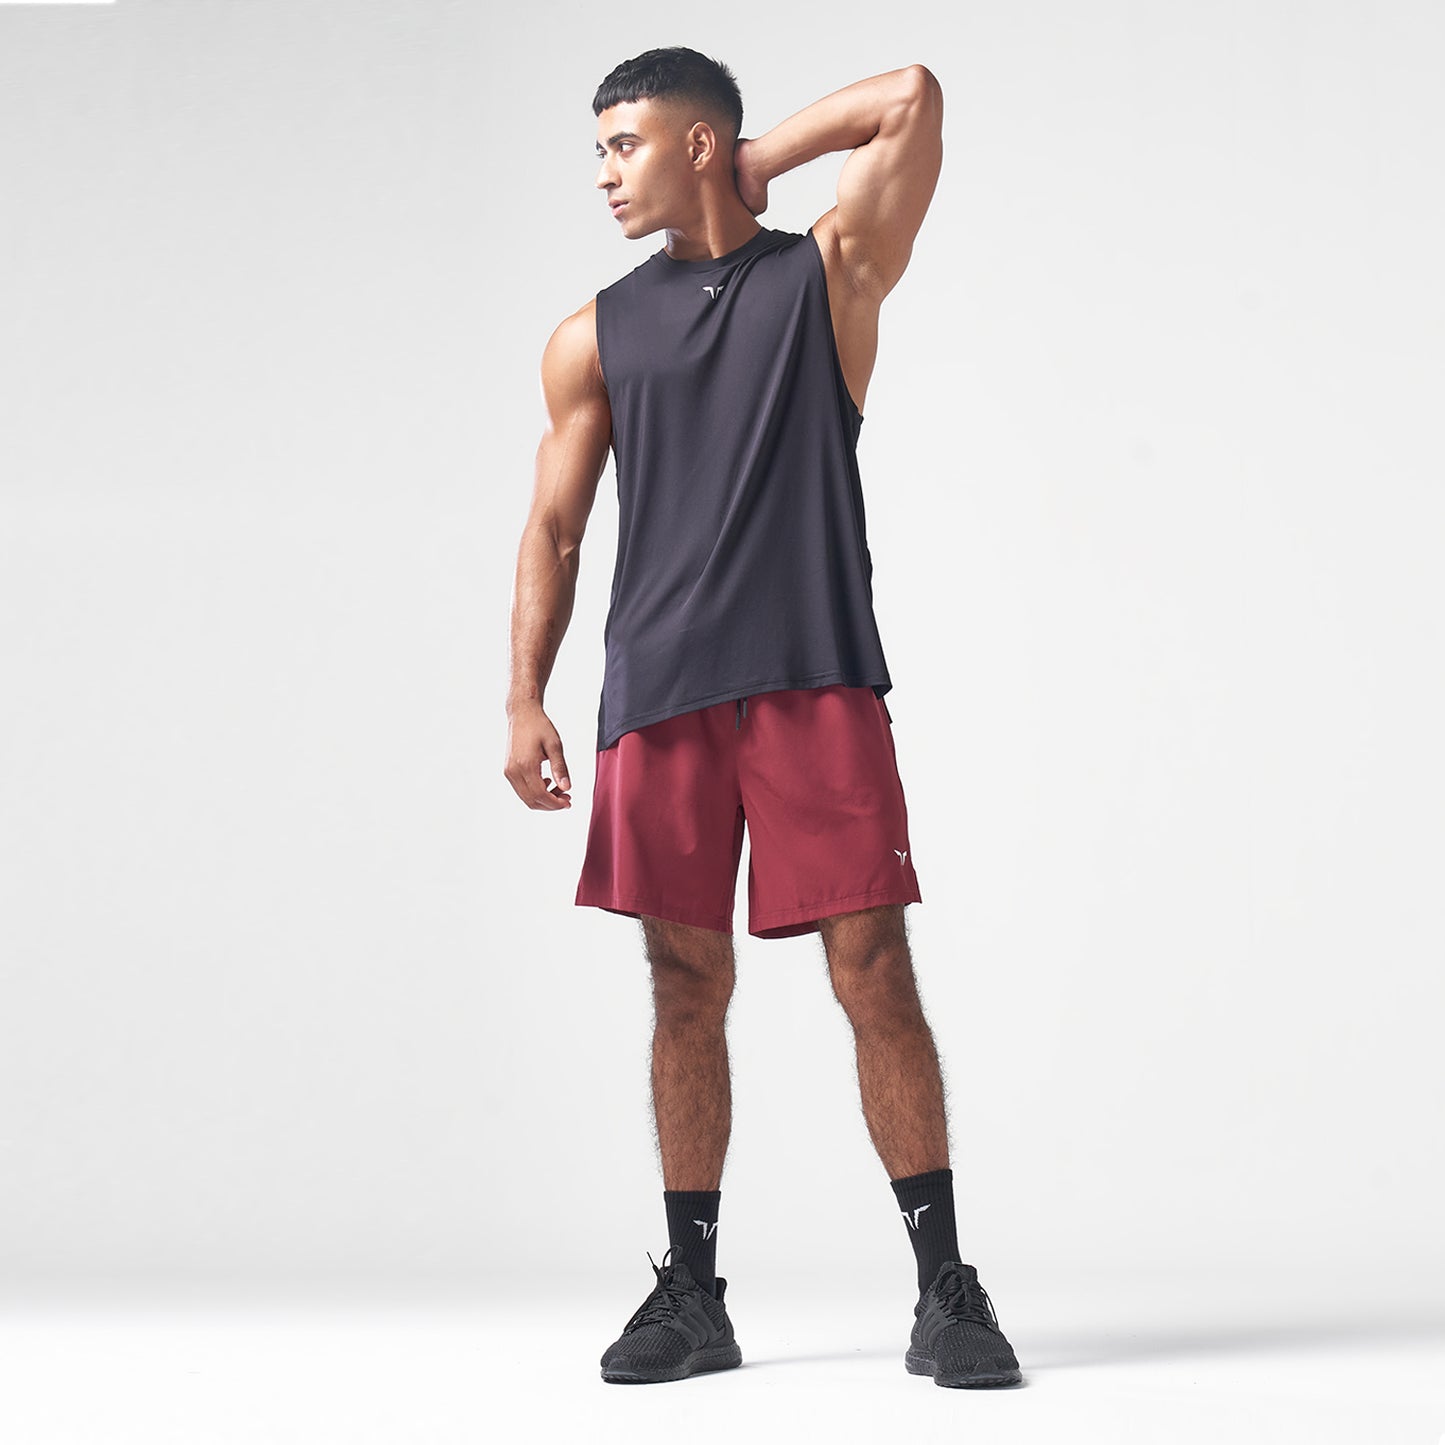 squatwolf-gym-wear-essential-gym-tank-black-workout-tank-for-men